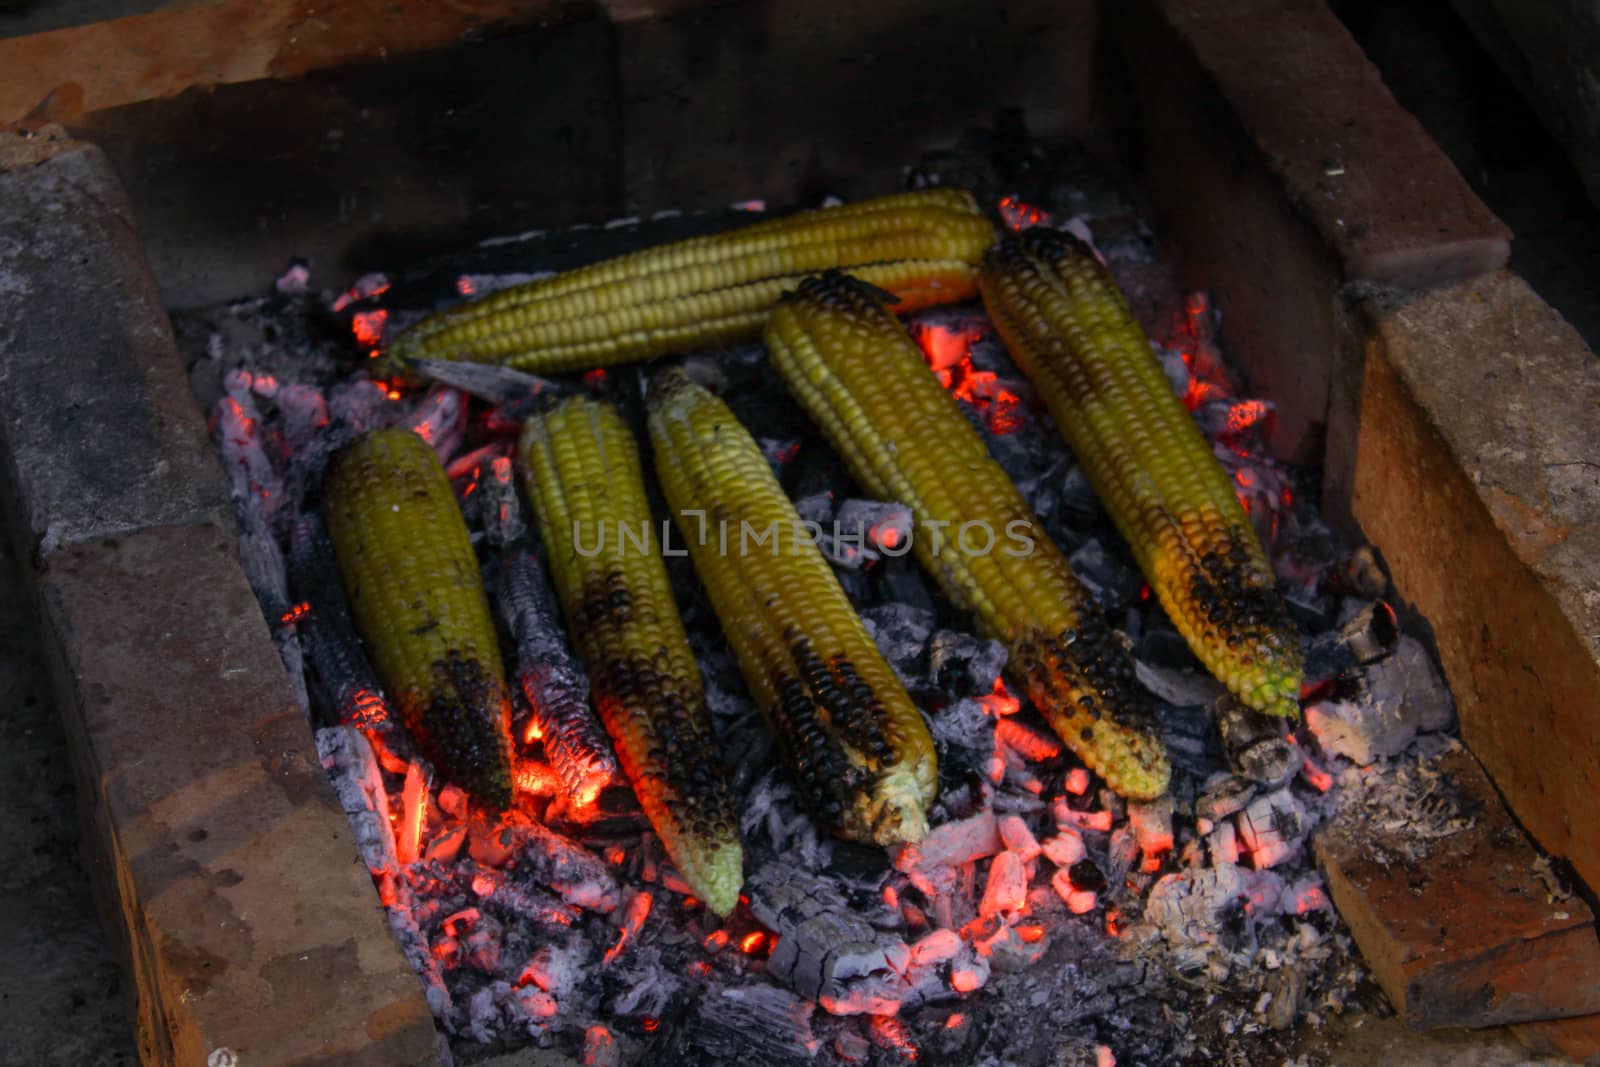 Burnt corn on the cob. Roasted corn on the cob. Summer nights by the fire. Zavidovici, Bosnia and Herzegovina.